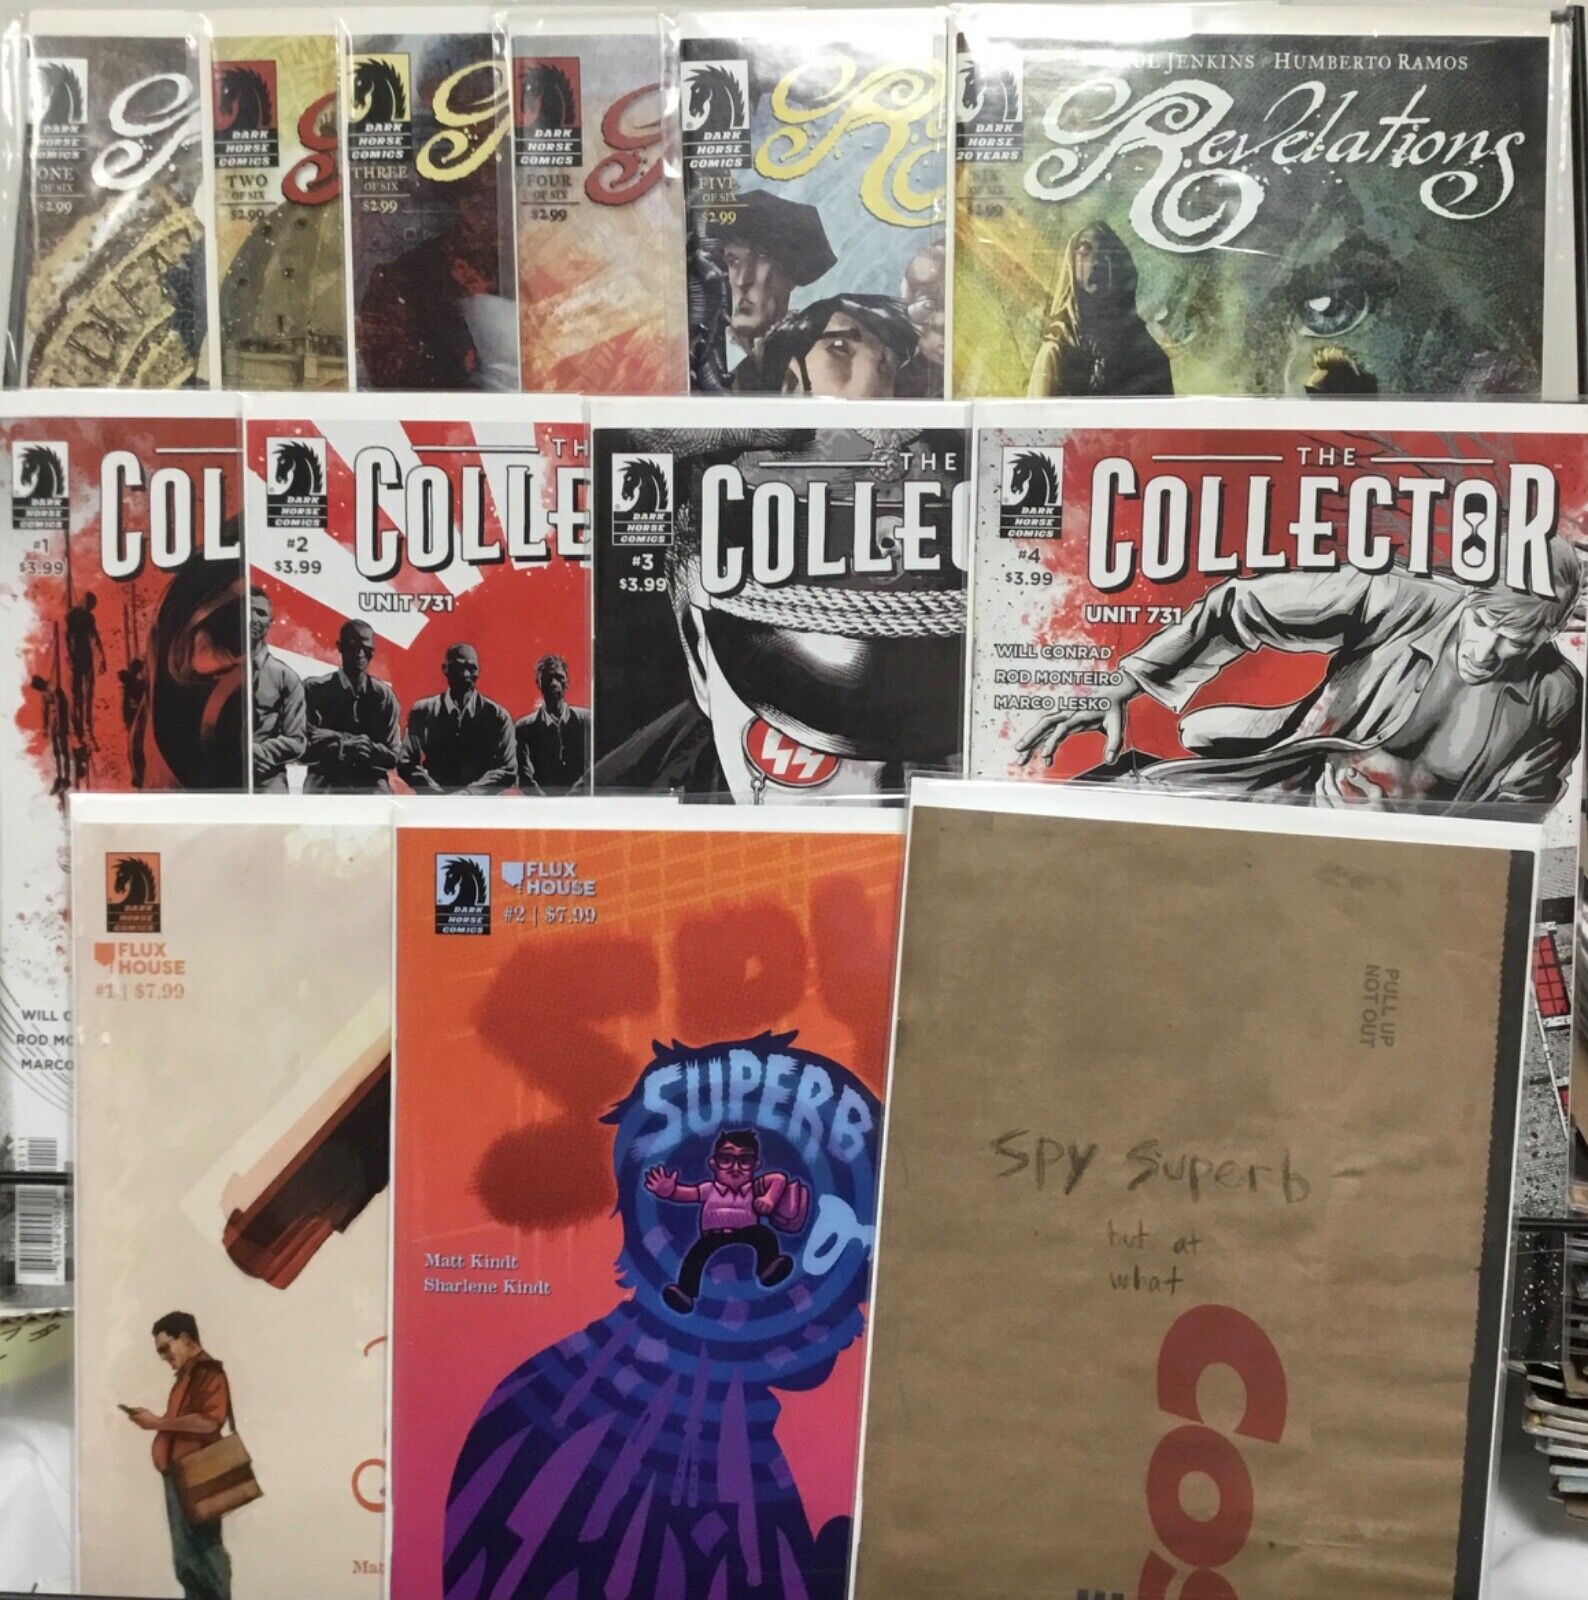 Dark Horse Comics Revelations 1-6, Collector 1-4, Spy Superb 1-3